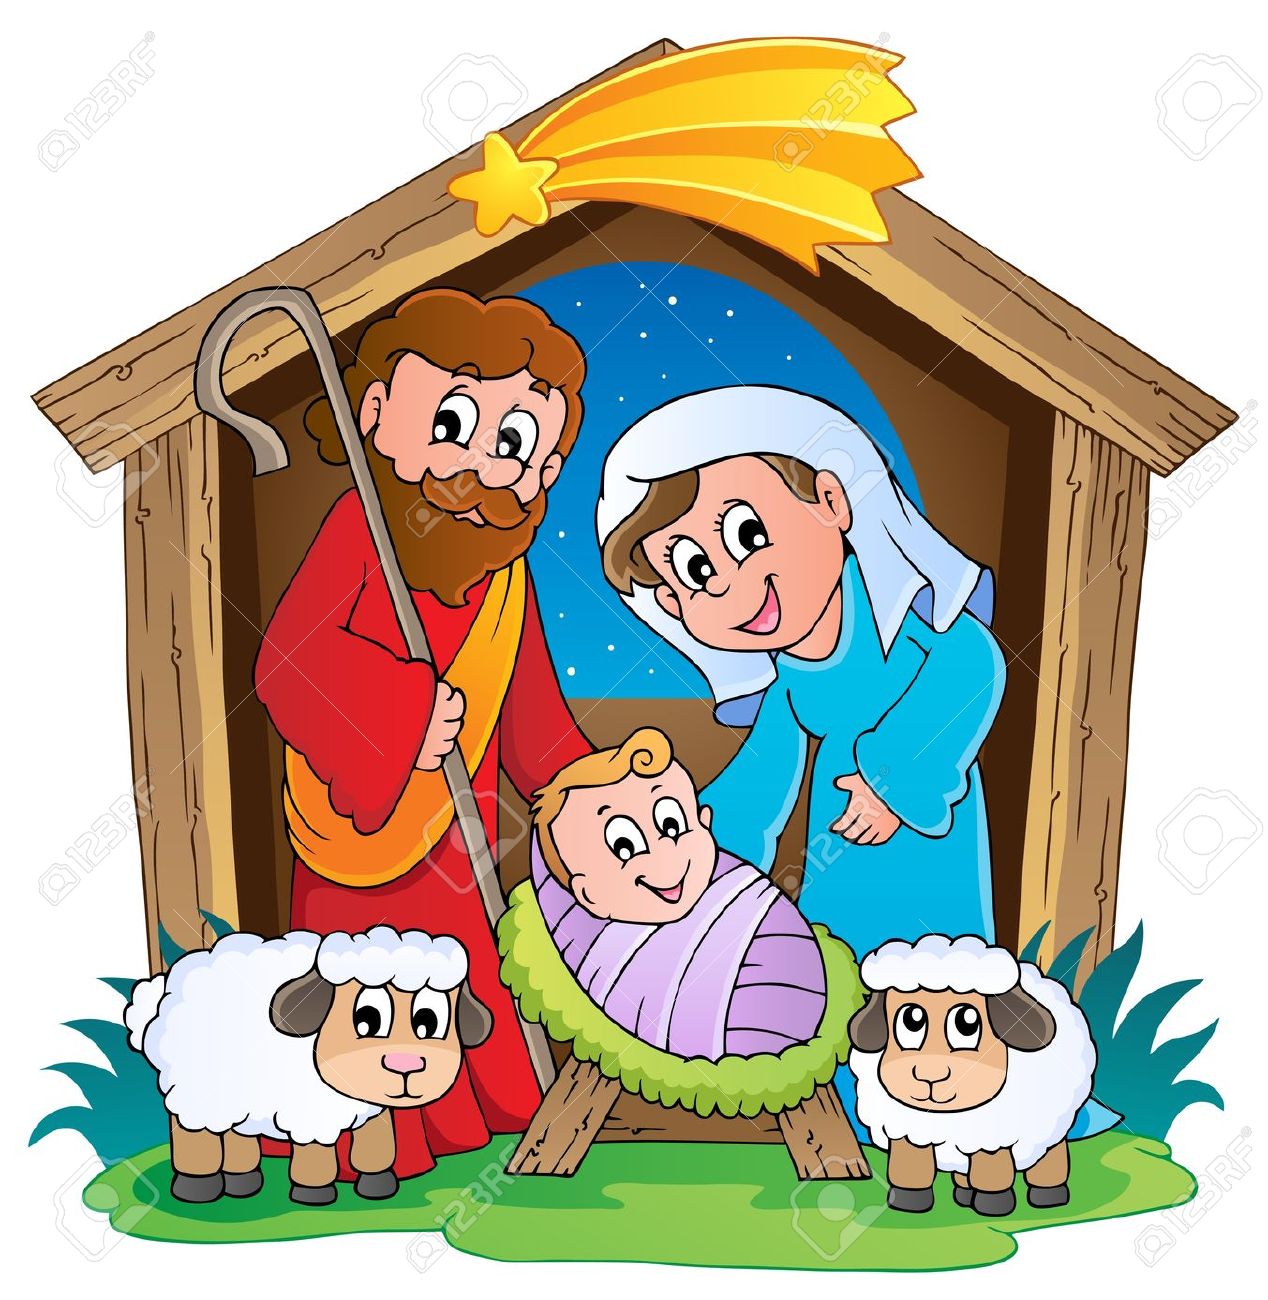 christmas nativity: Christmas Nativity scene 2 Illustration